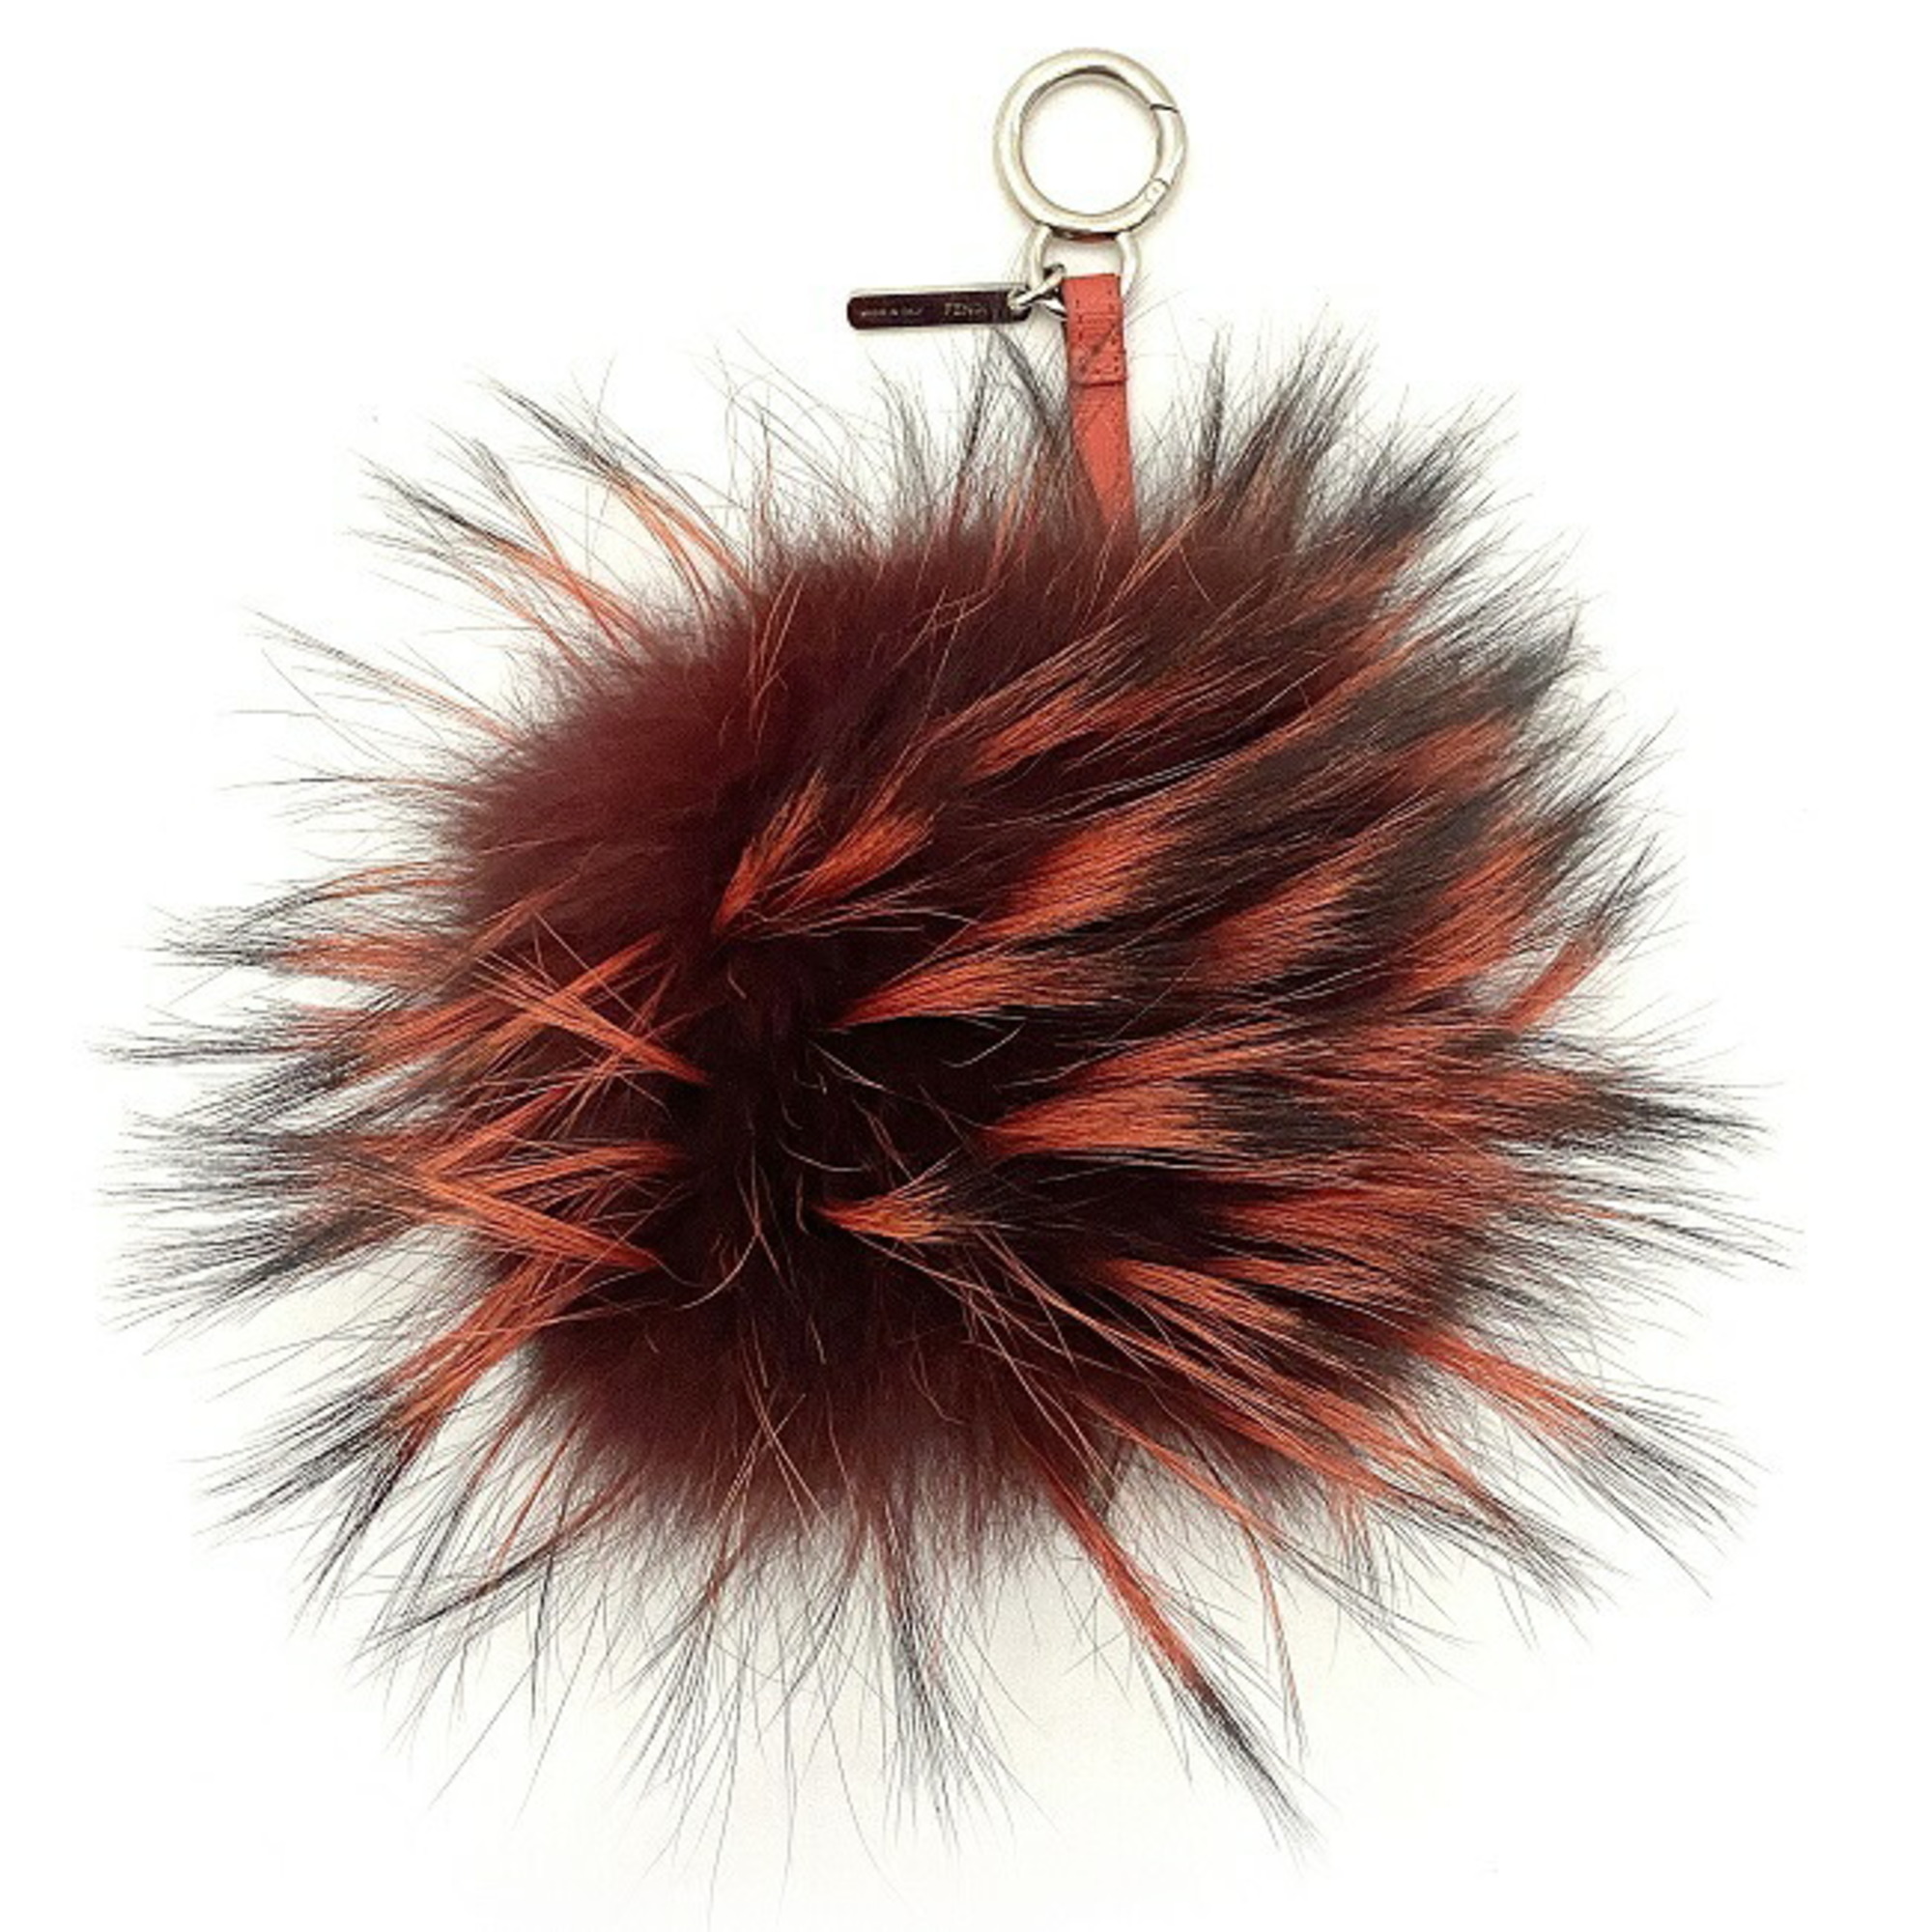 Fendi Keychain Bag Bugs Bordeaux Red Beige Silver Monster 7AR683 Fur Leather FENDI Charm Kabuki Accent Impact